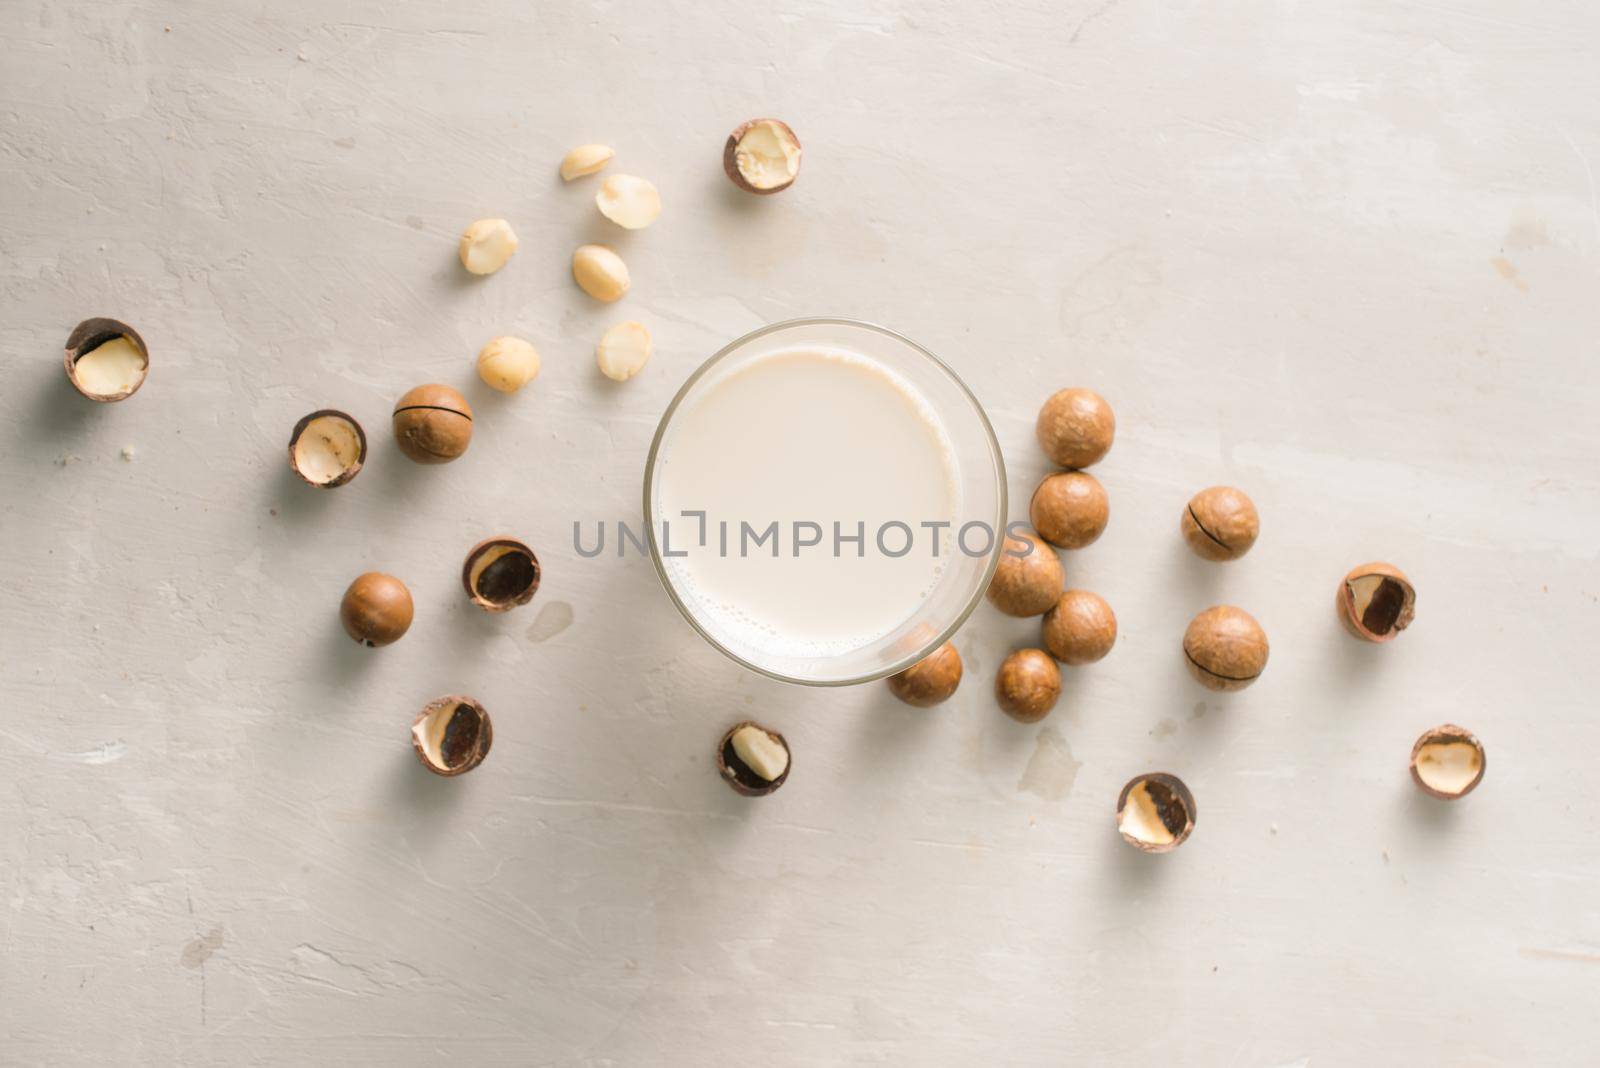 Superfood. Organic macadamia nuts and glass of macadamia milk on stone background. by makidotvn